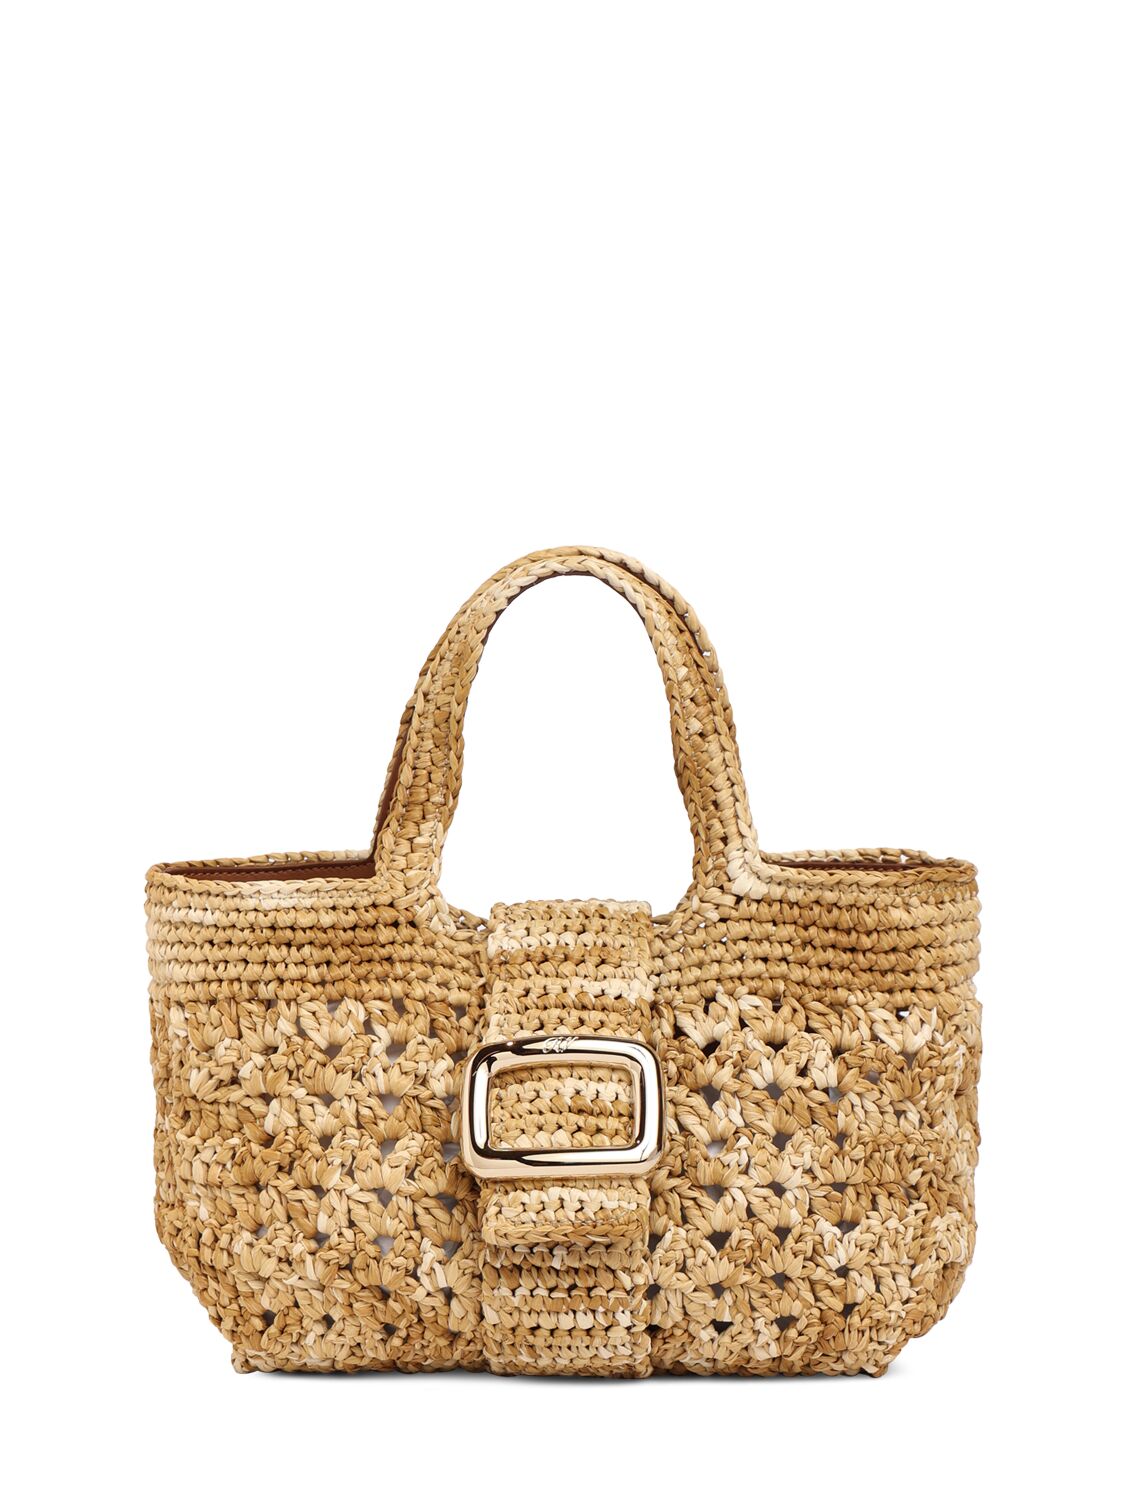 Image of Grand Vivier Choc Crochet Top Handle Bag